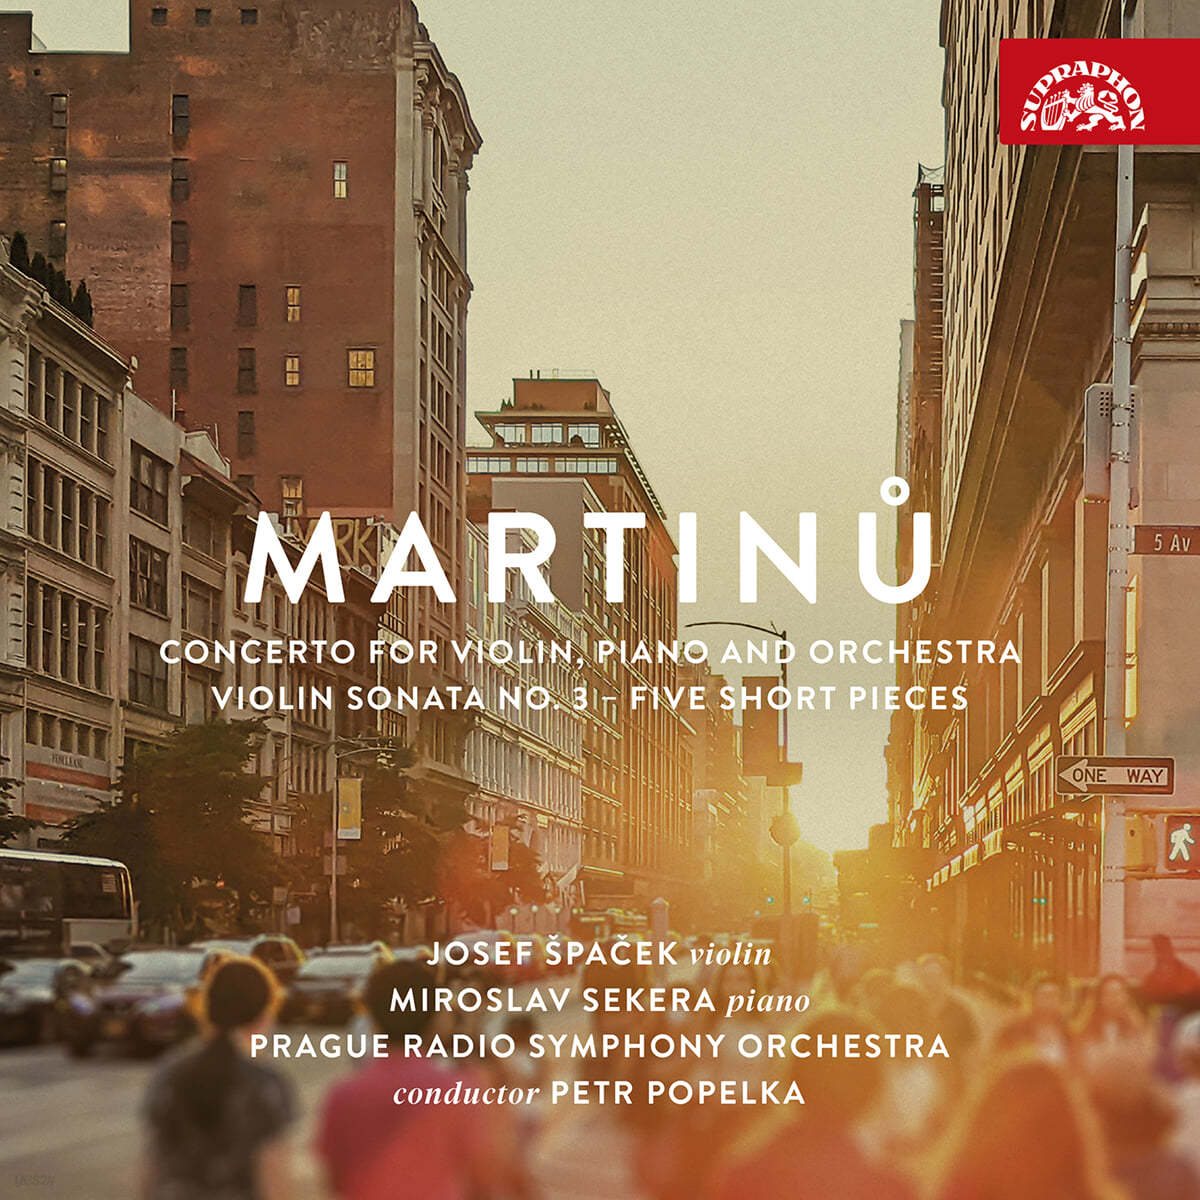 Josef Spacek / Miroslav Sekera 마르티누: 바이올린과 피아노를 위한 협주곡, 바이올린 소나타 3번, 다섯 개의 소품 (Martinu: Concerto for Violin, Piano and Orchestra, Violin Sonata No. 3)